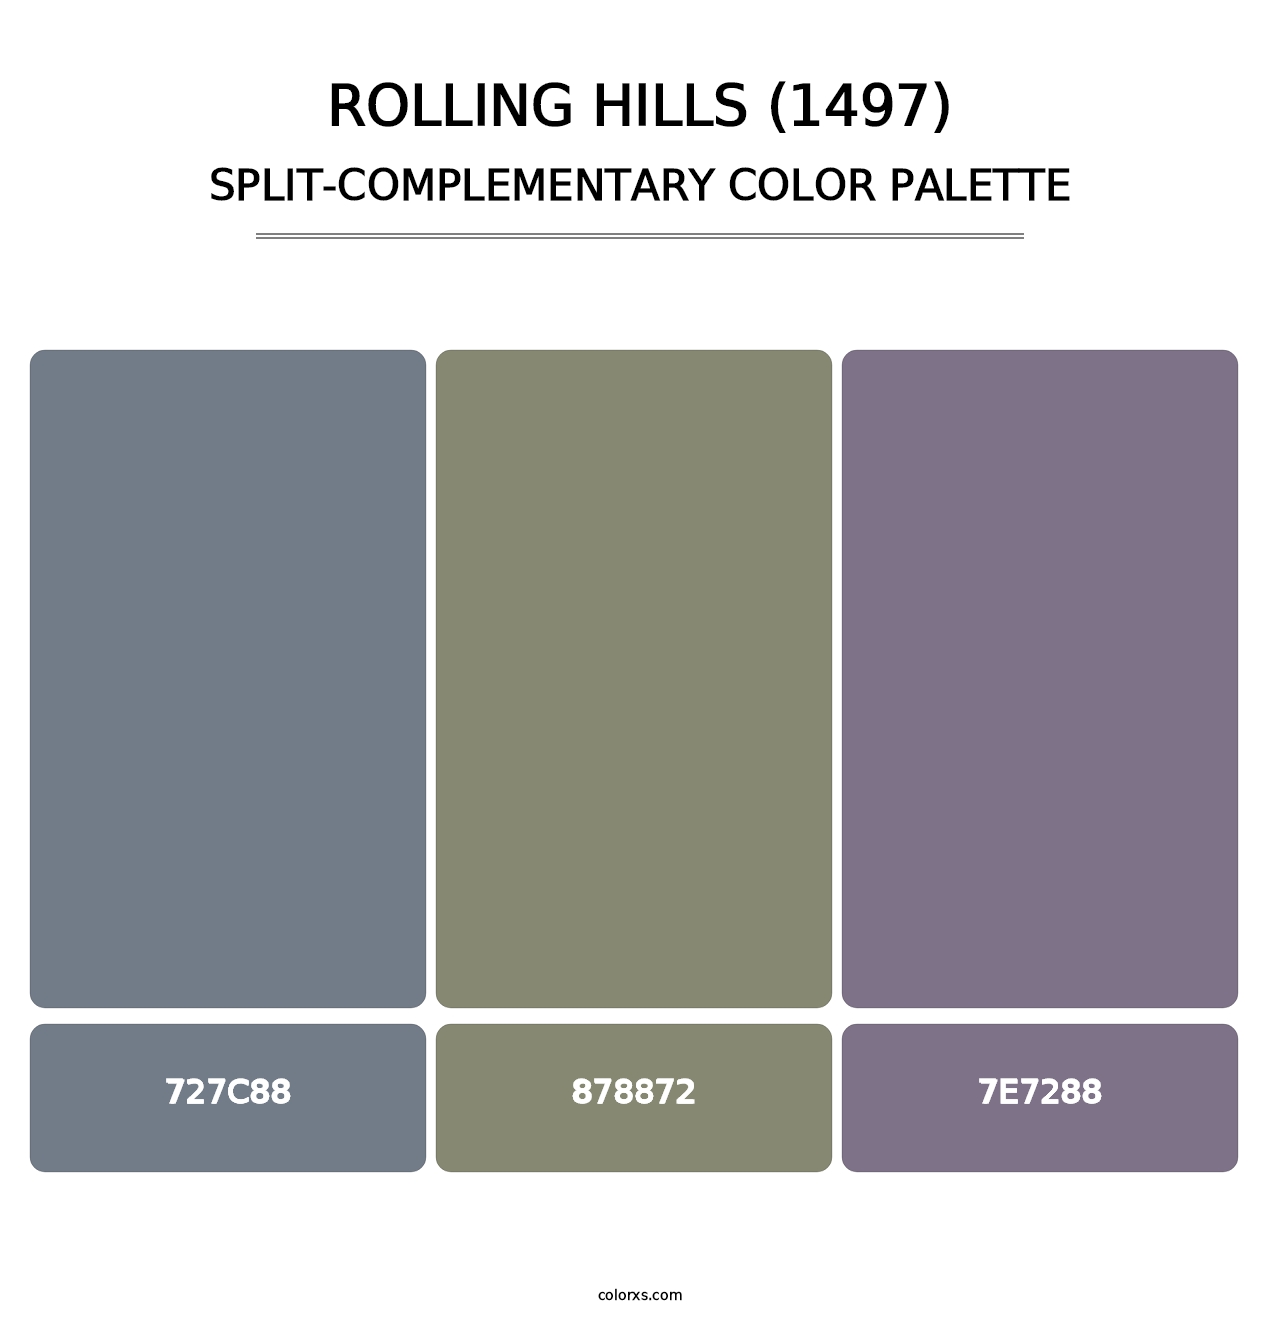 Rolling Hills (1497) - Split-Complementary Color Palette